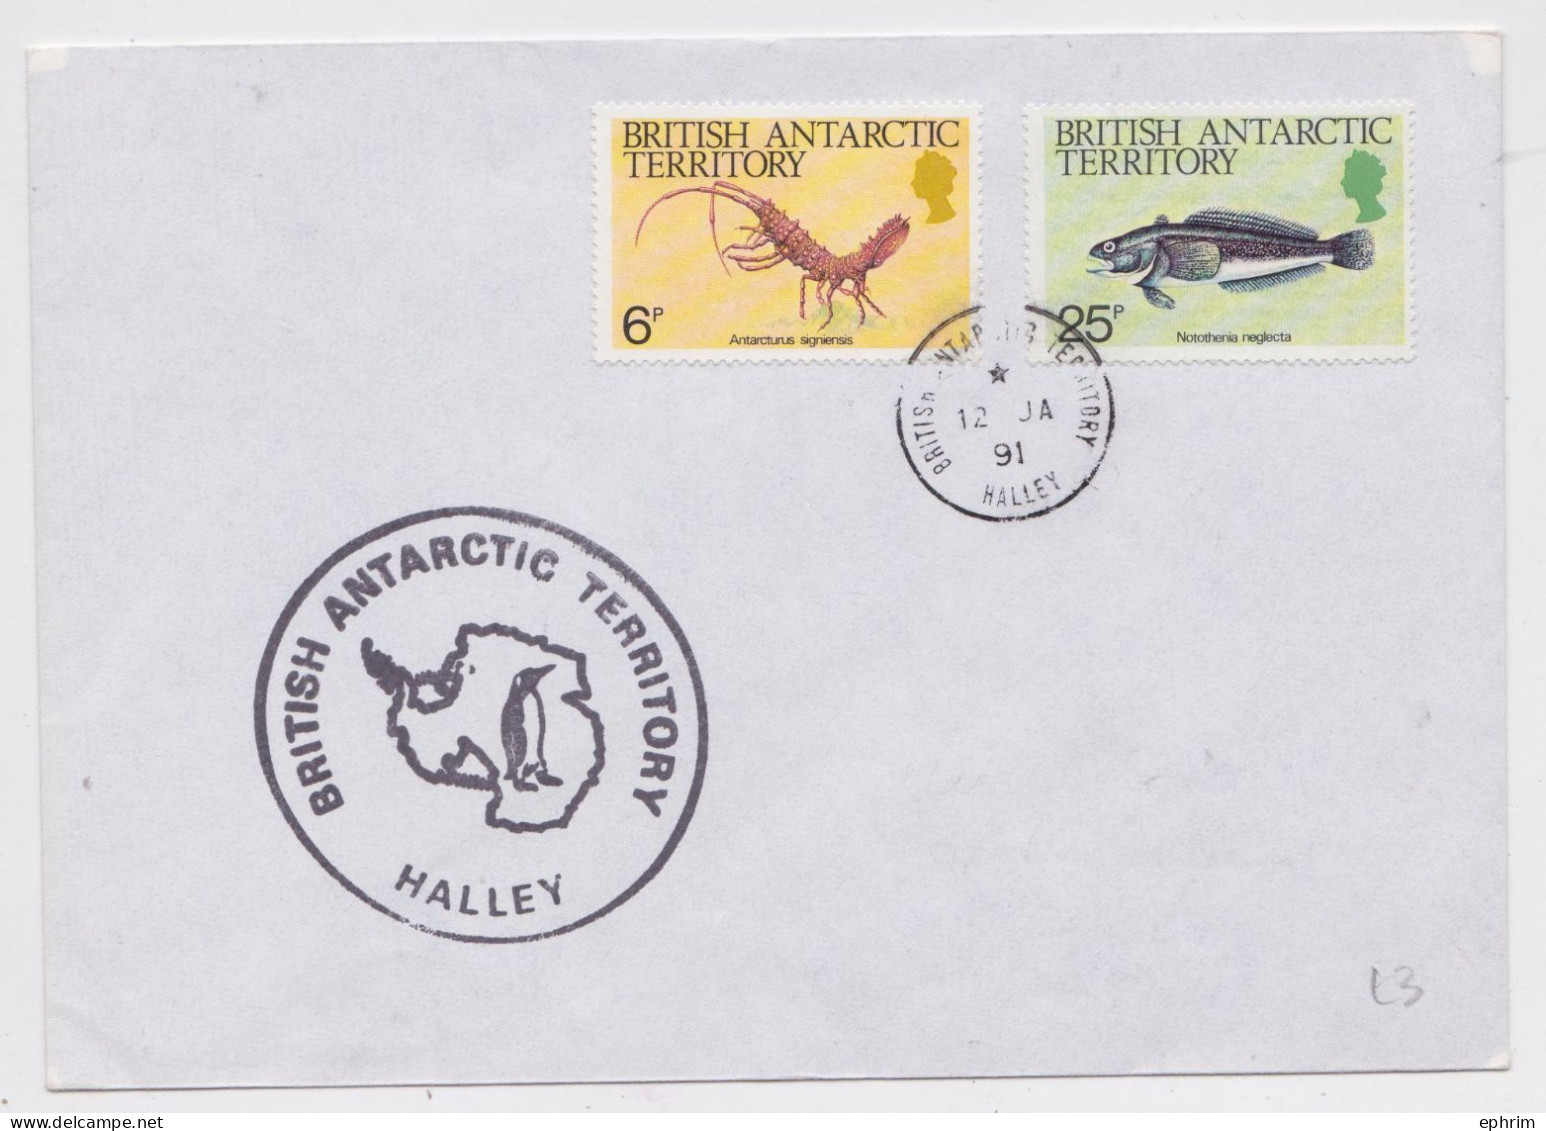 Antarctique BAT Britsh Antarctic Territory Base Halley Marine Life Stamp Cover 1991 Enveloppe Timbre Poisson Crustacé - Brieven En Documenten